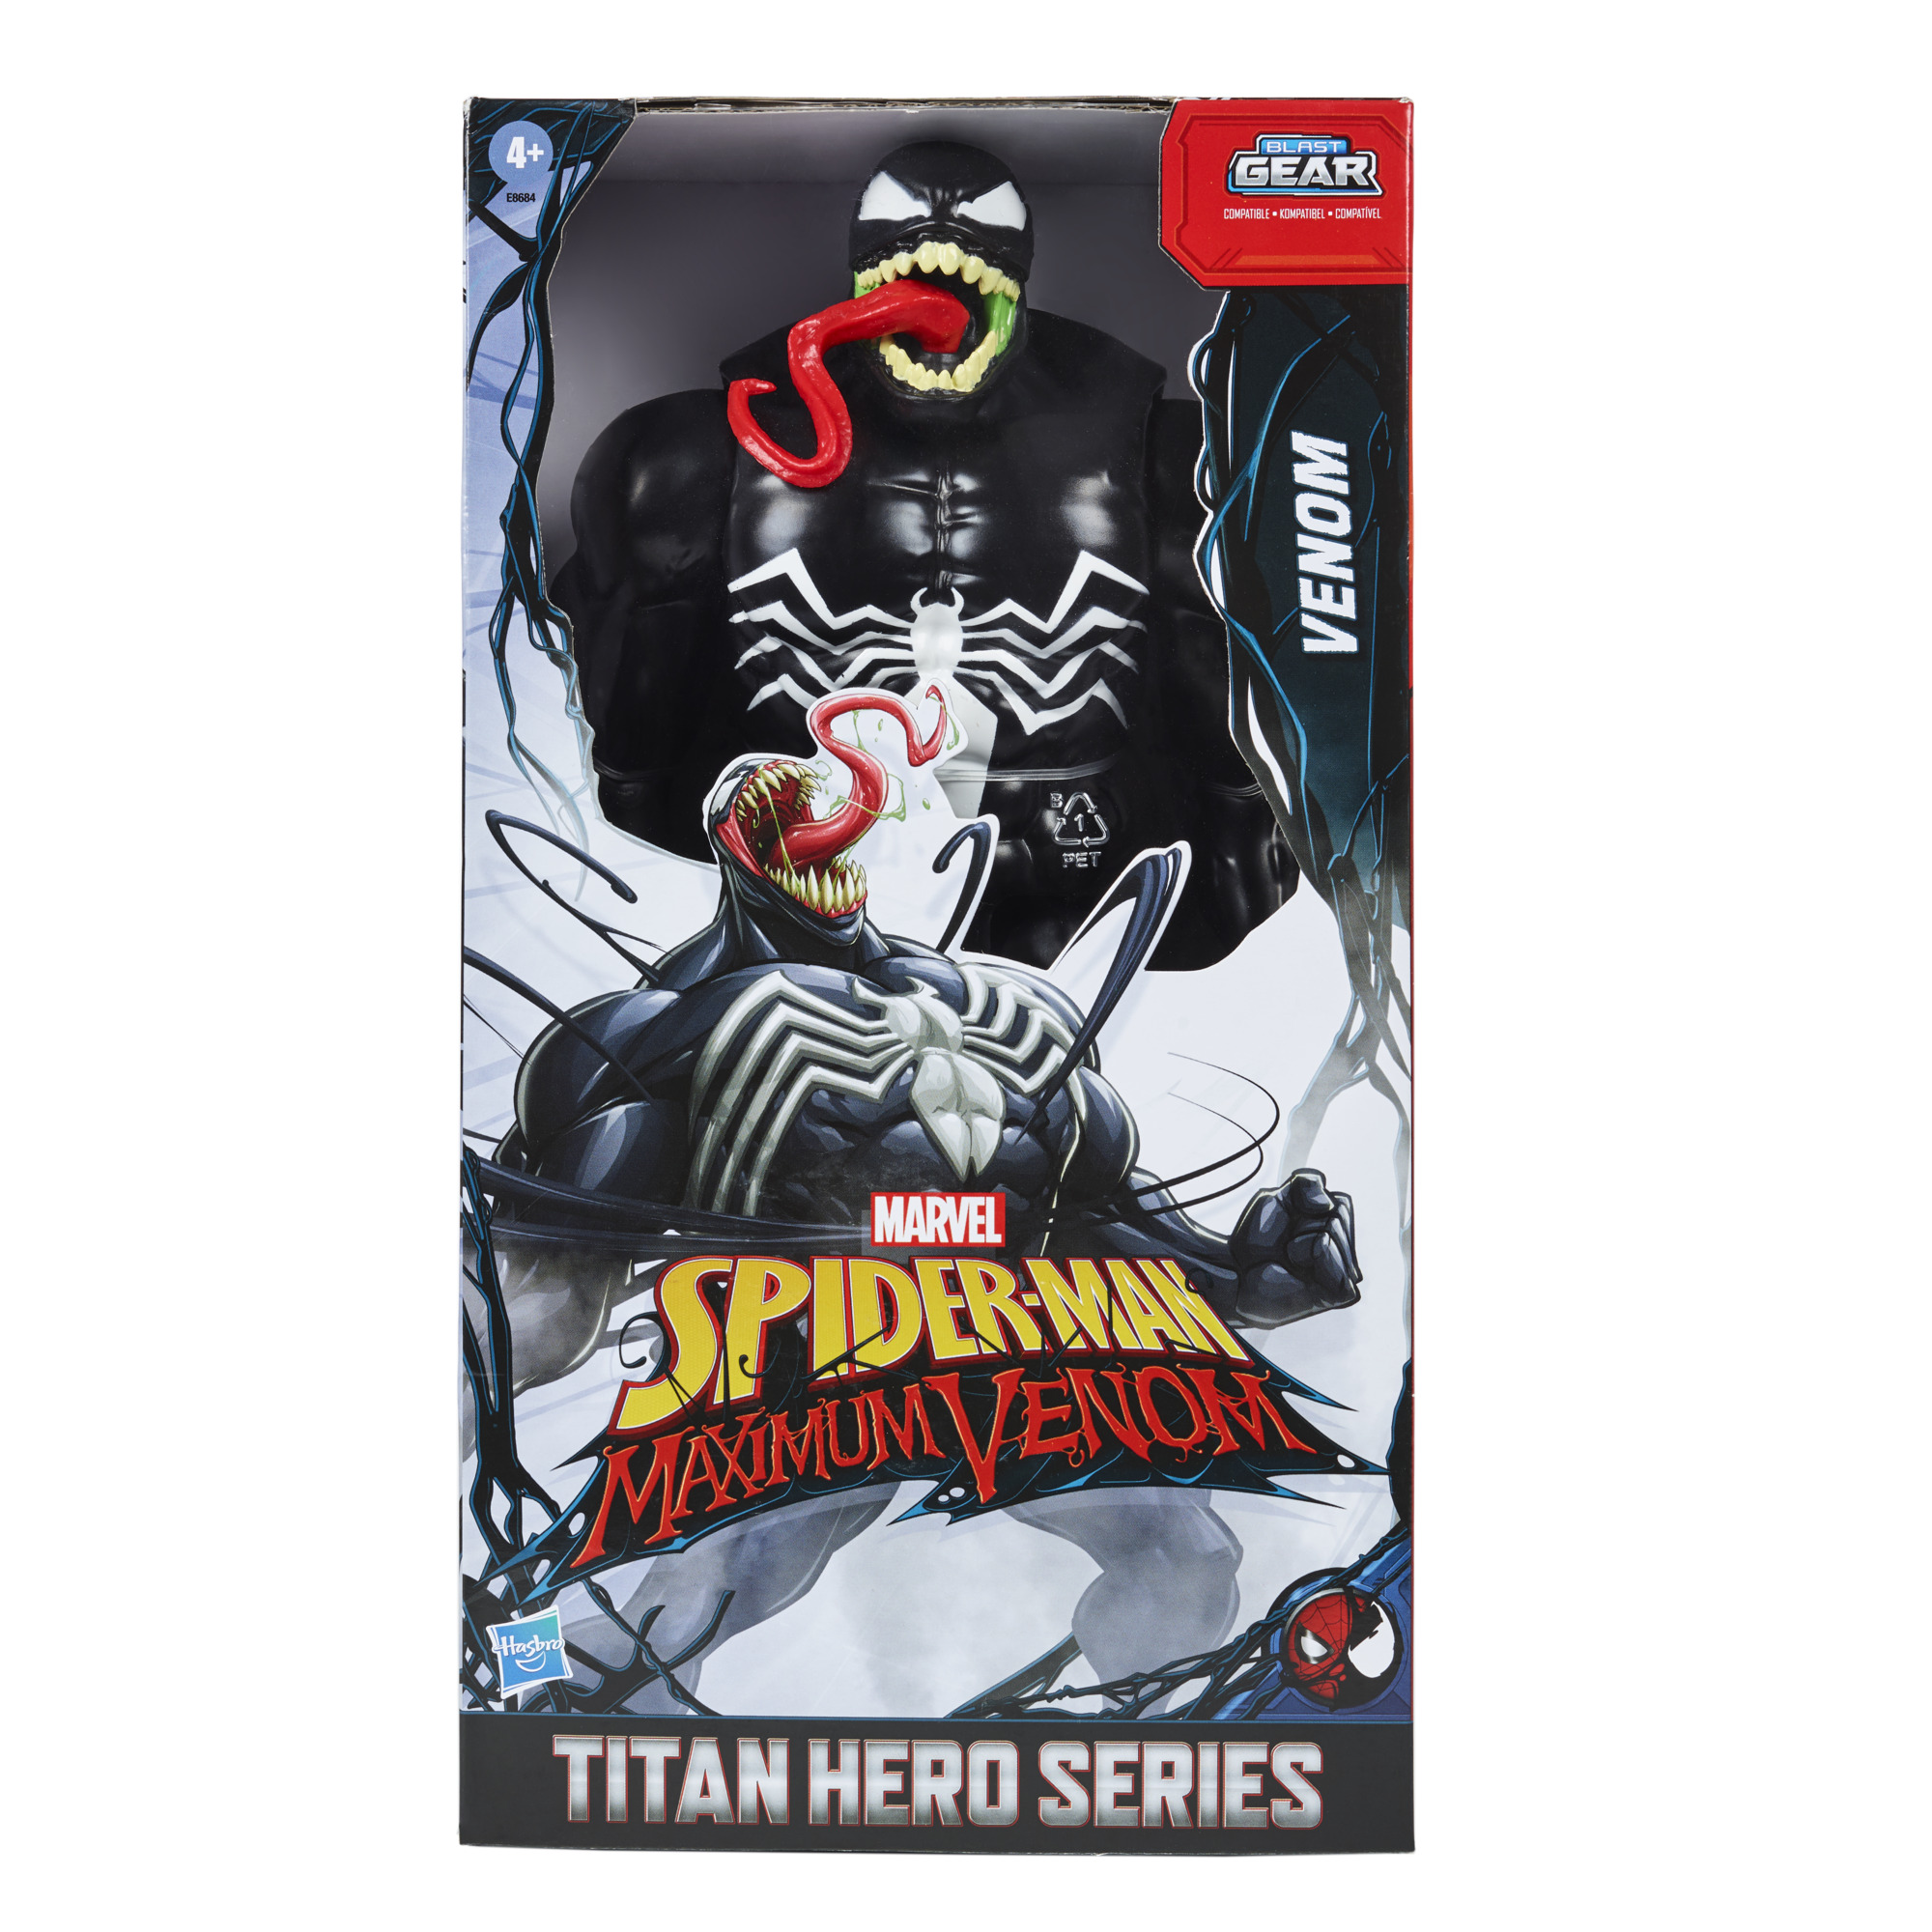 Spider Man Maximum Venom Titan Hero Venom Blast Gear Compatible Back Port Trusted Tradition Since 1880 - bad guy spidey venom roblox